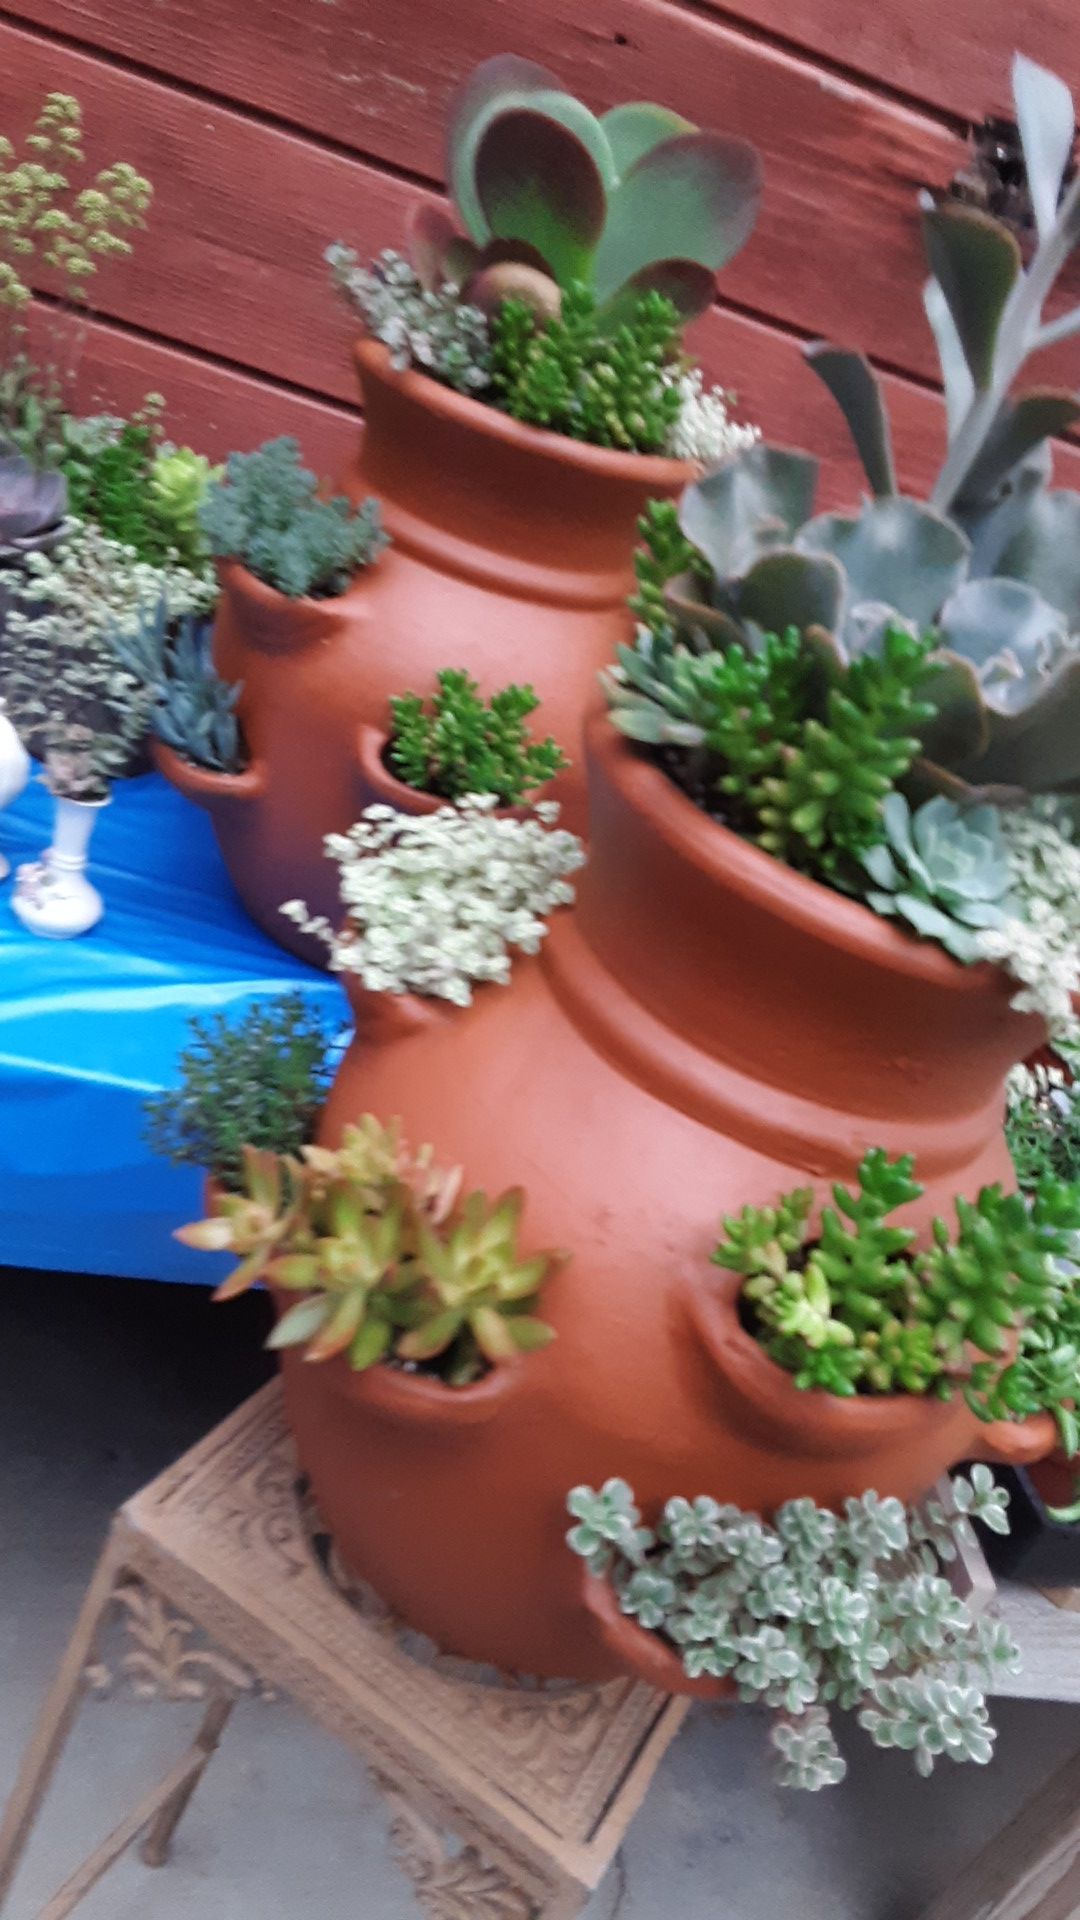 18" clay pots with succulent plants $50 each